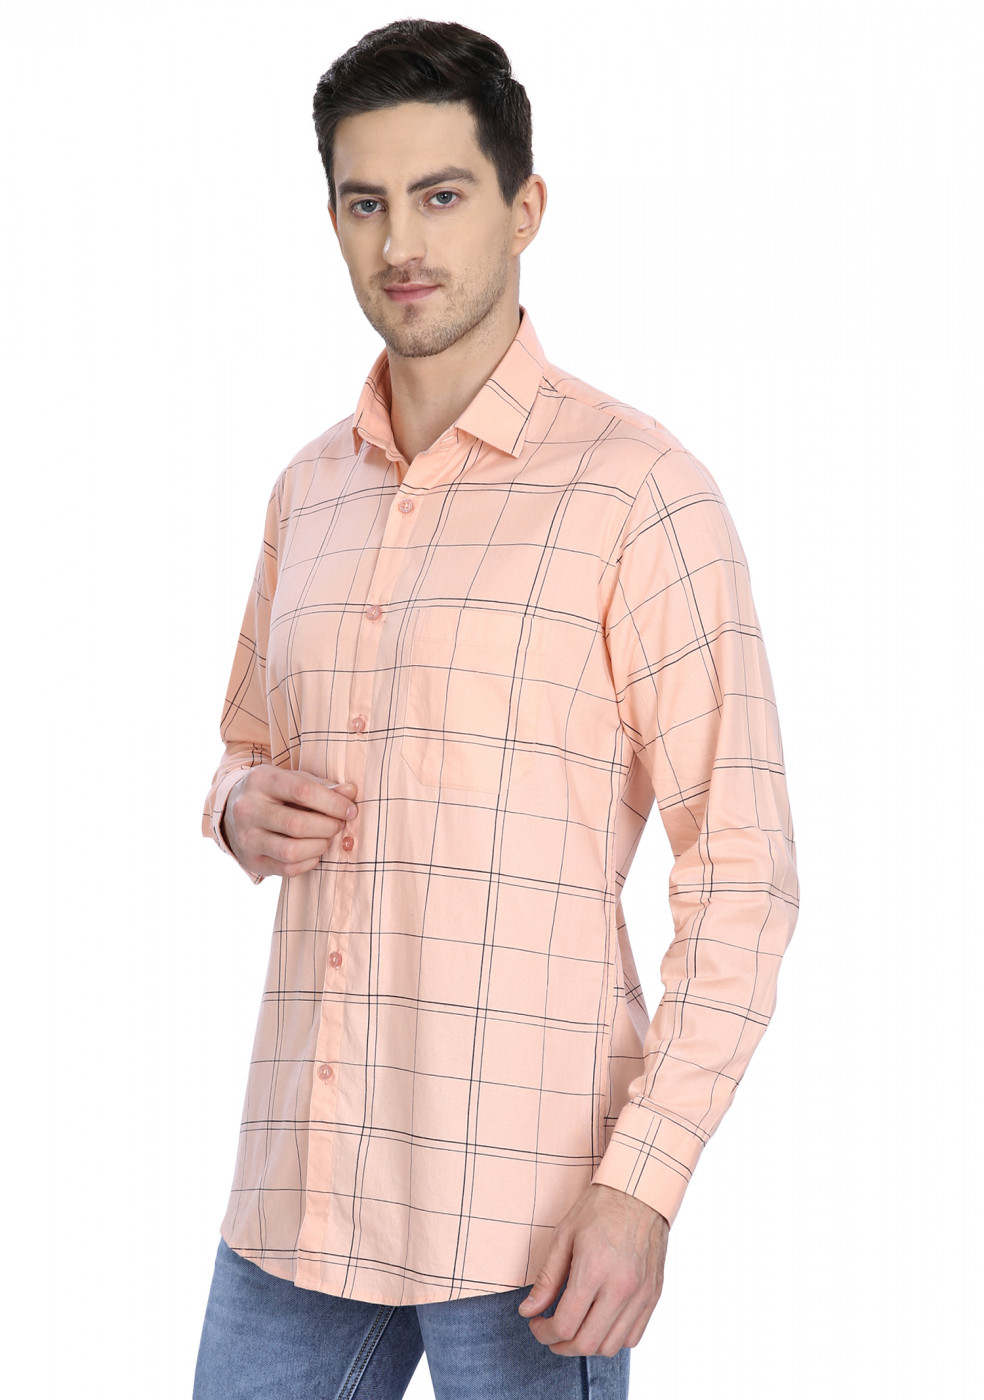 Peach Color Big Check Cotton Shirt For Men